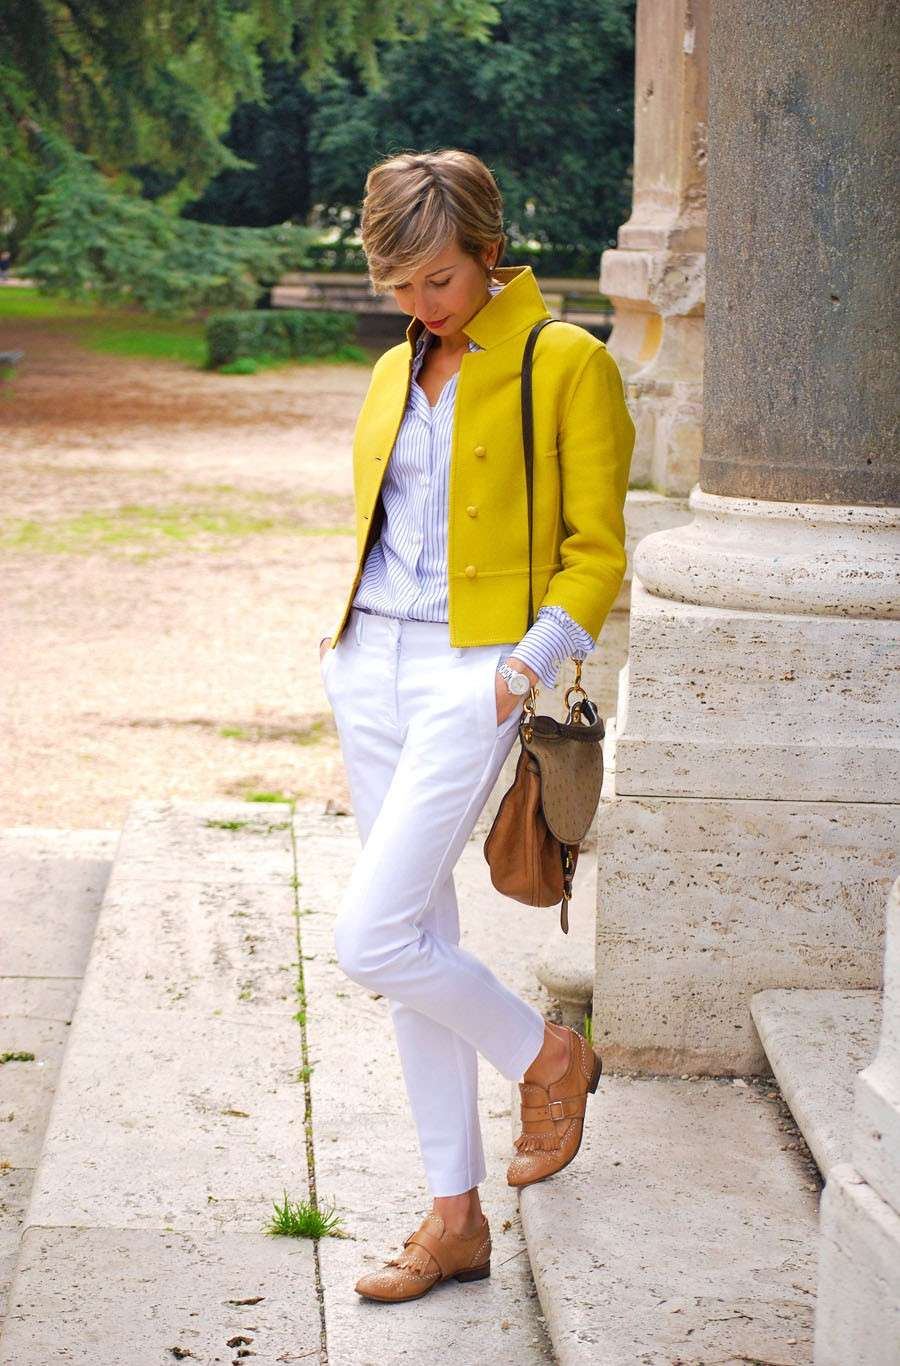 Francesine beige con pantalone bianco